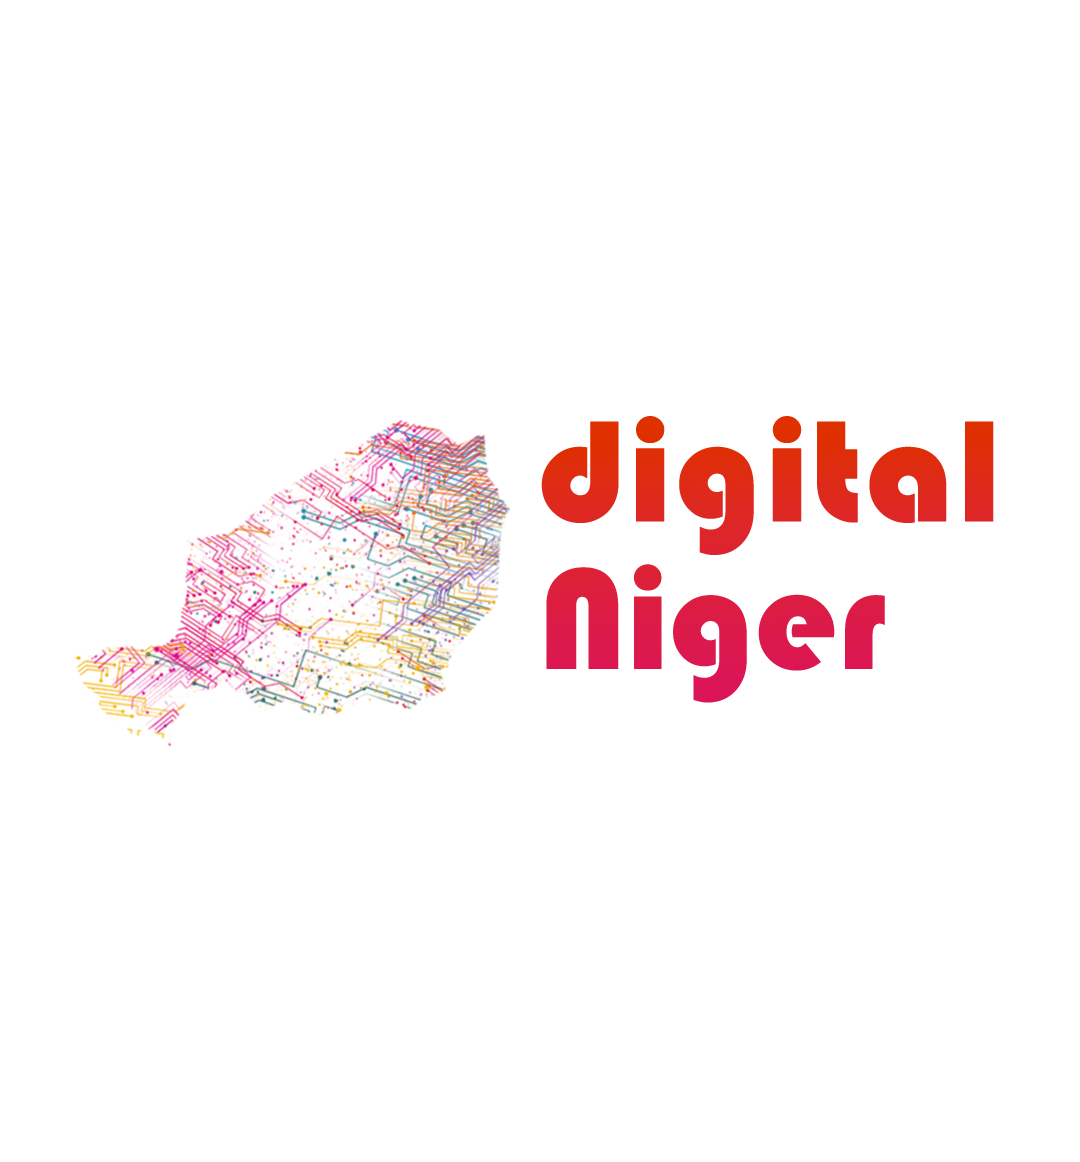 Digital Niger